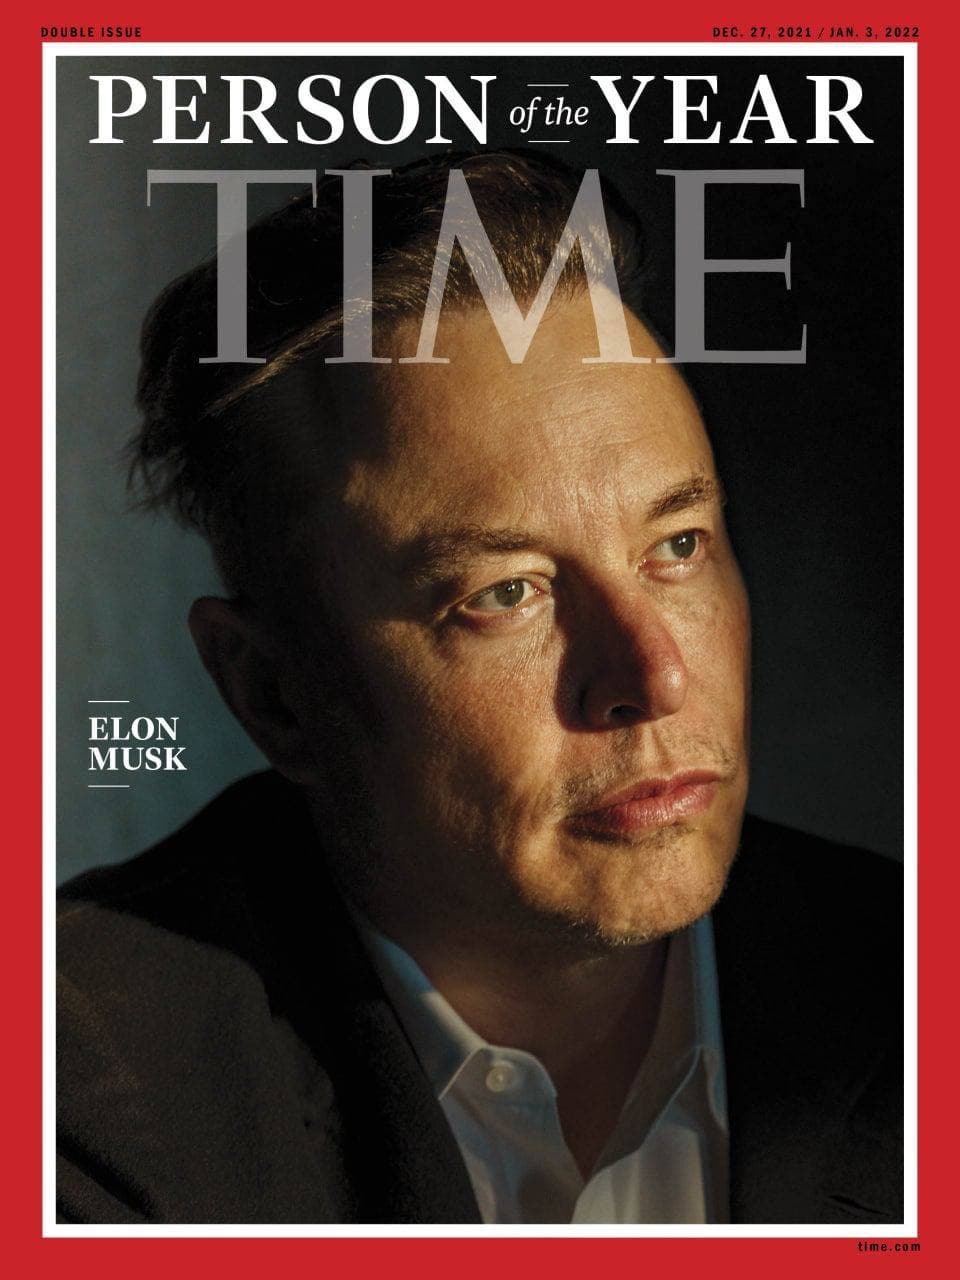 Илон Маск - человек года по версии журнала Time Фото: time.com